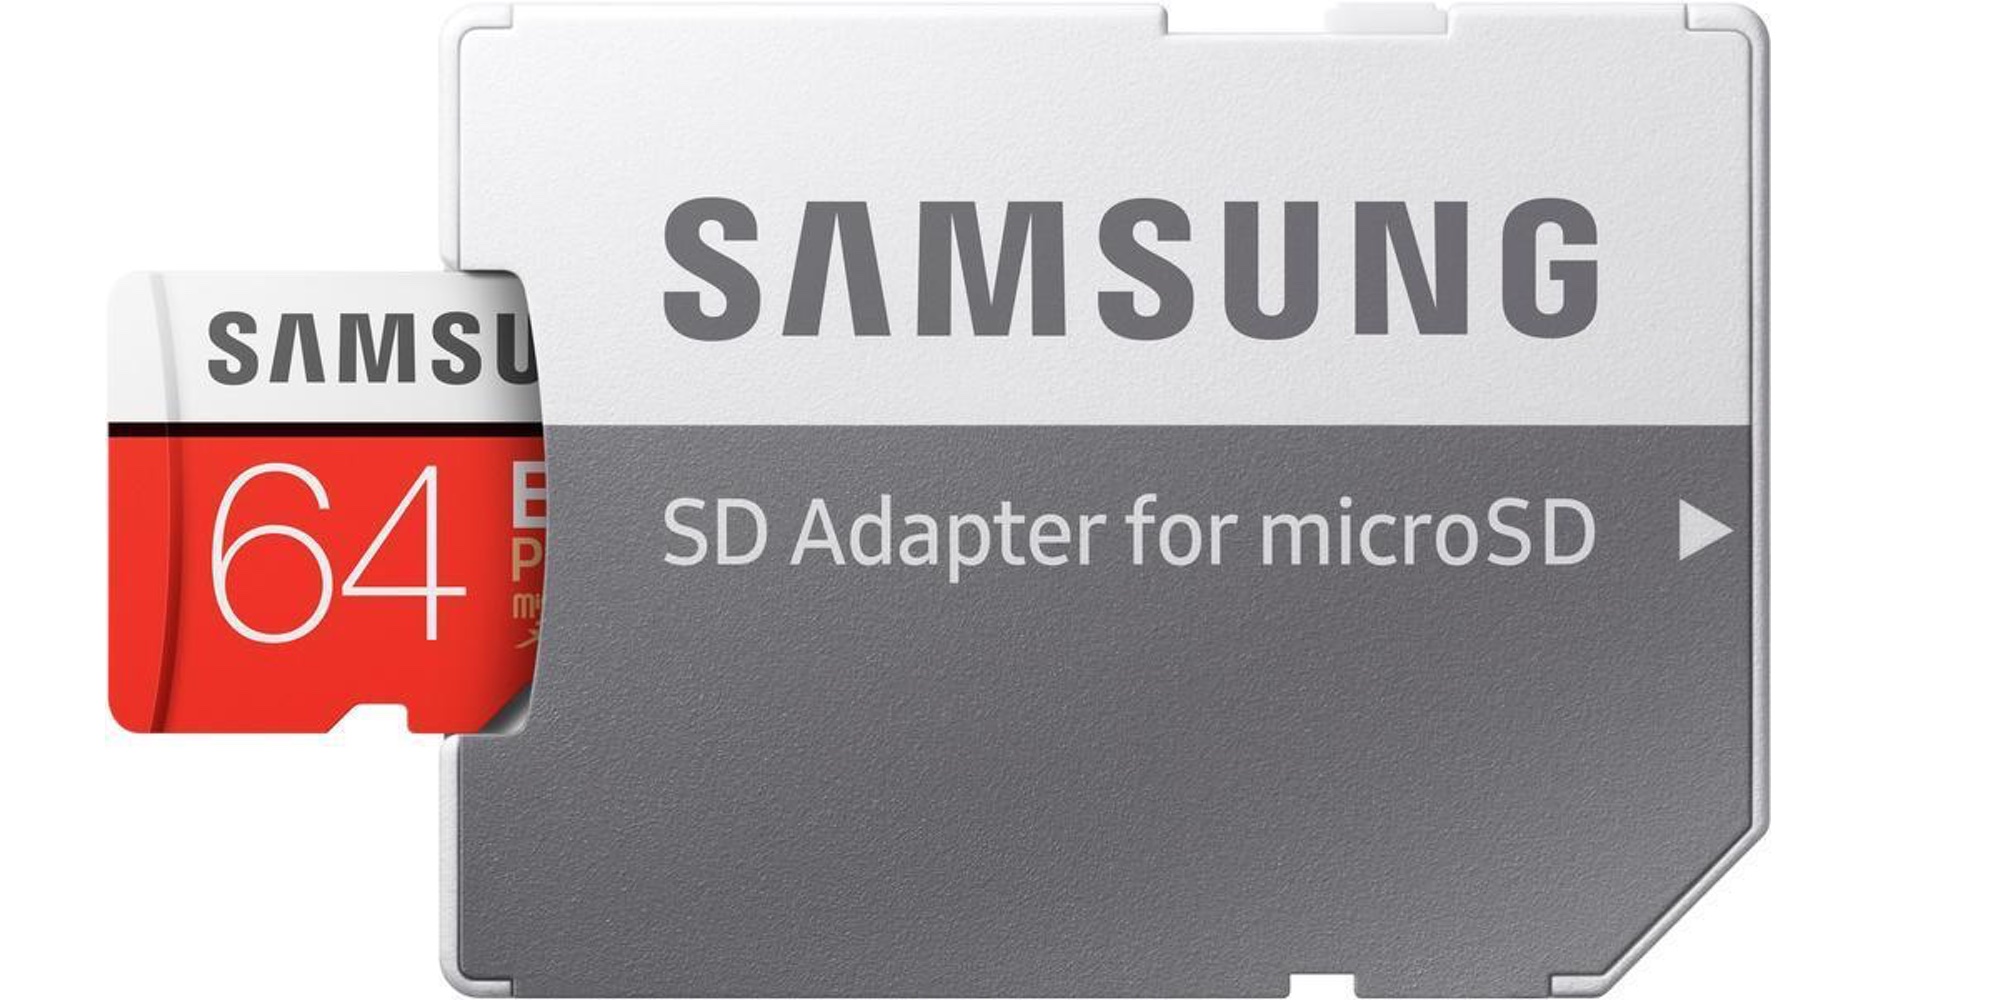 Samsung EVO Plus 64GB microSDXC UHS-I Memory Card for $20 shipped